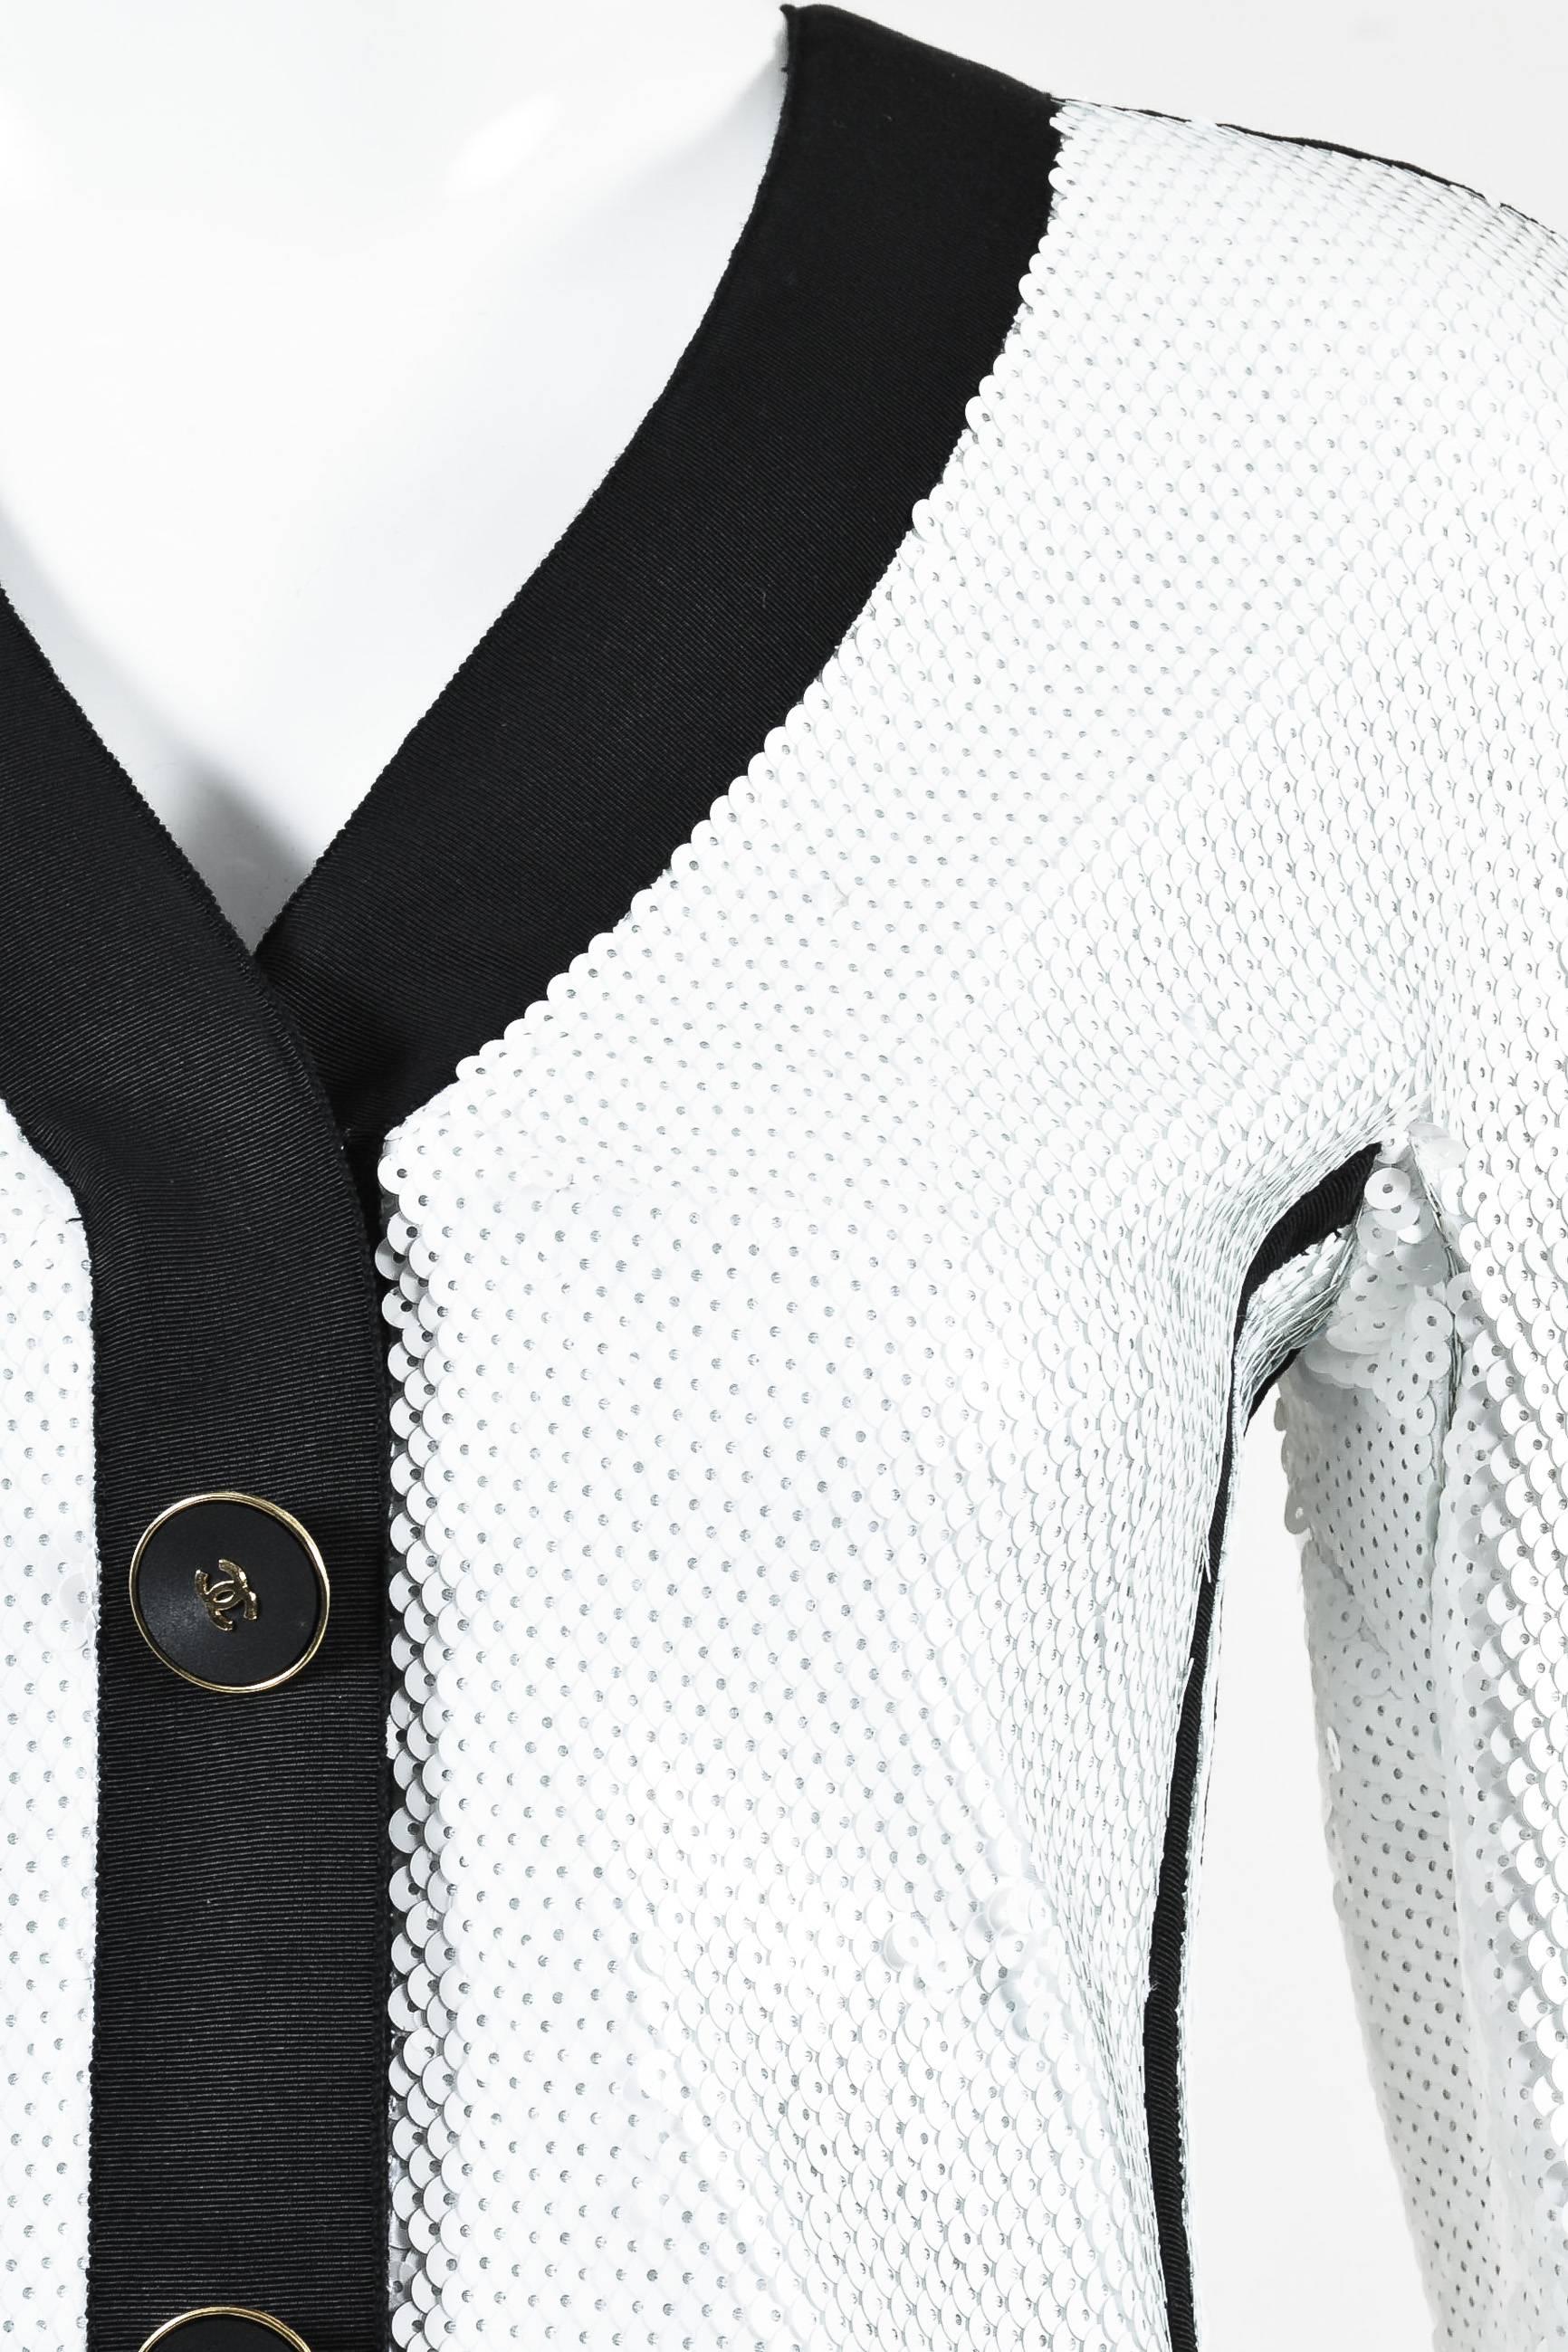 Women's Vintage Chanel Boutique Black & White Sequined & 'CC' Button Structured Jacket For Sale